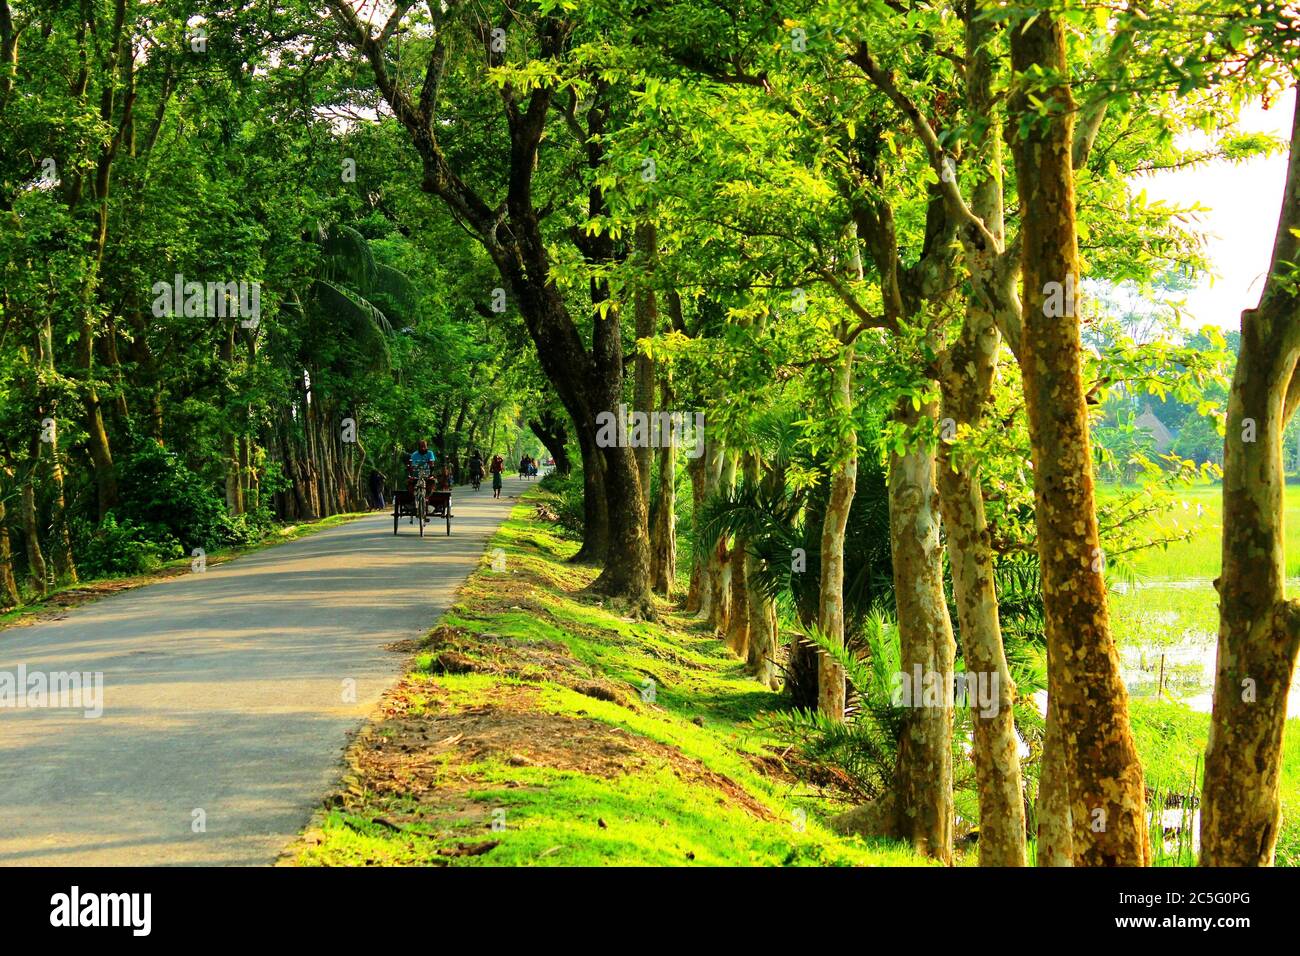 Bangladeshii village street view Stock Photo